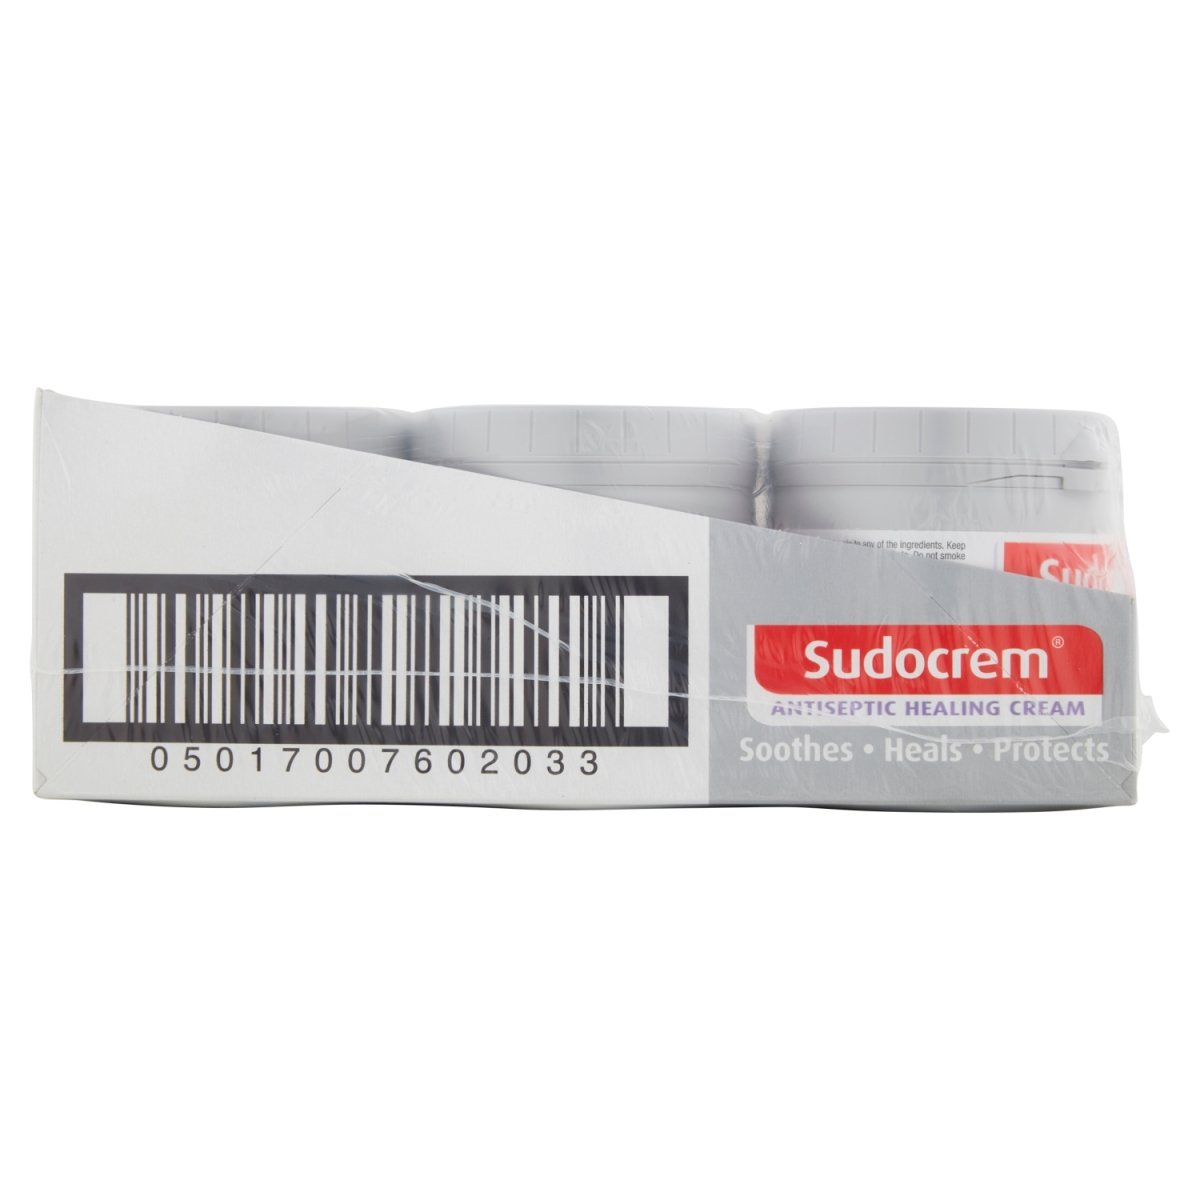 Sudocrem Tub 400g (MED) - Intamarque 5017007601326